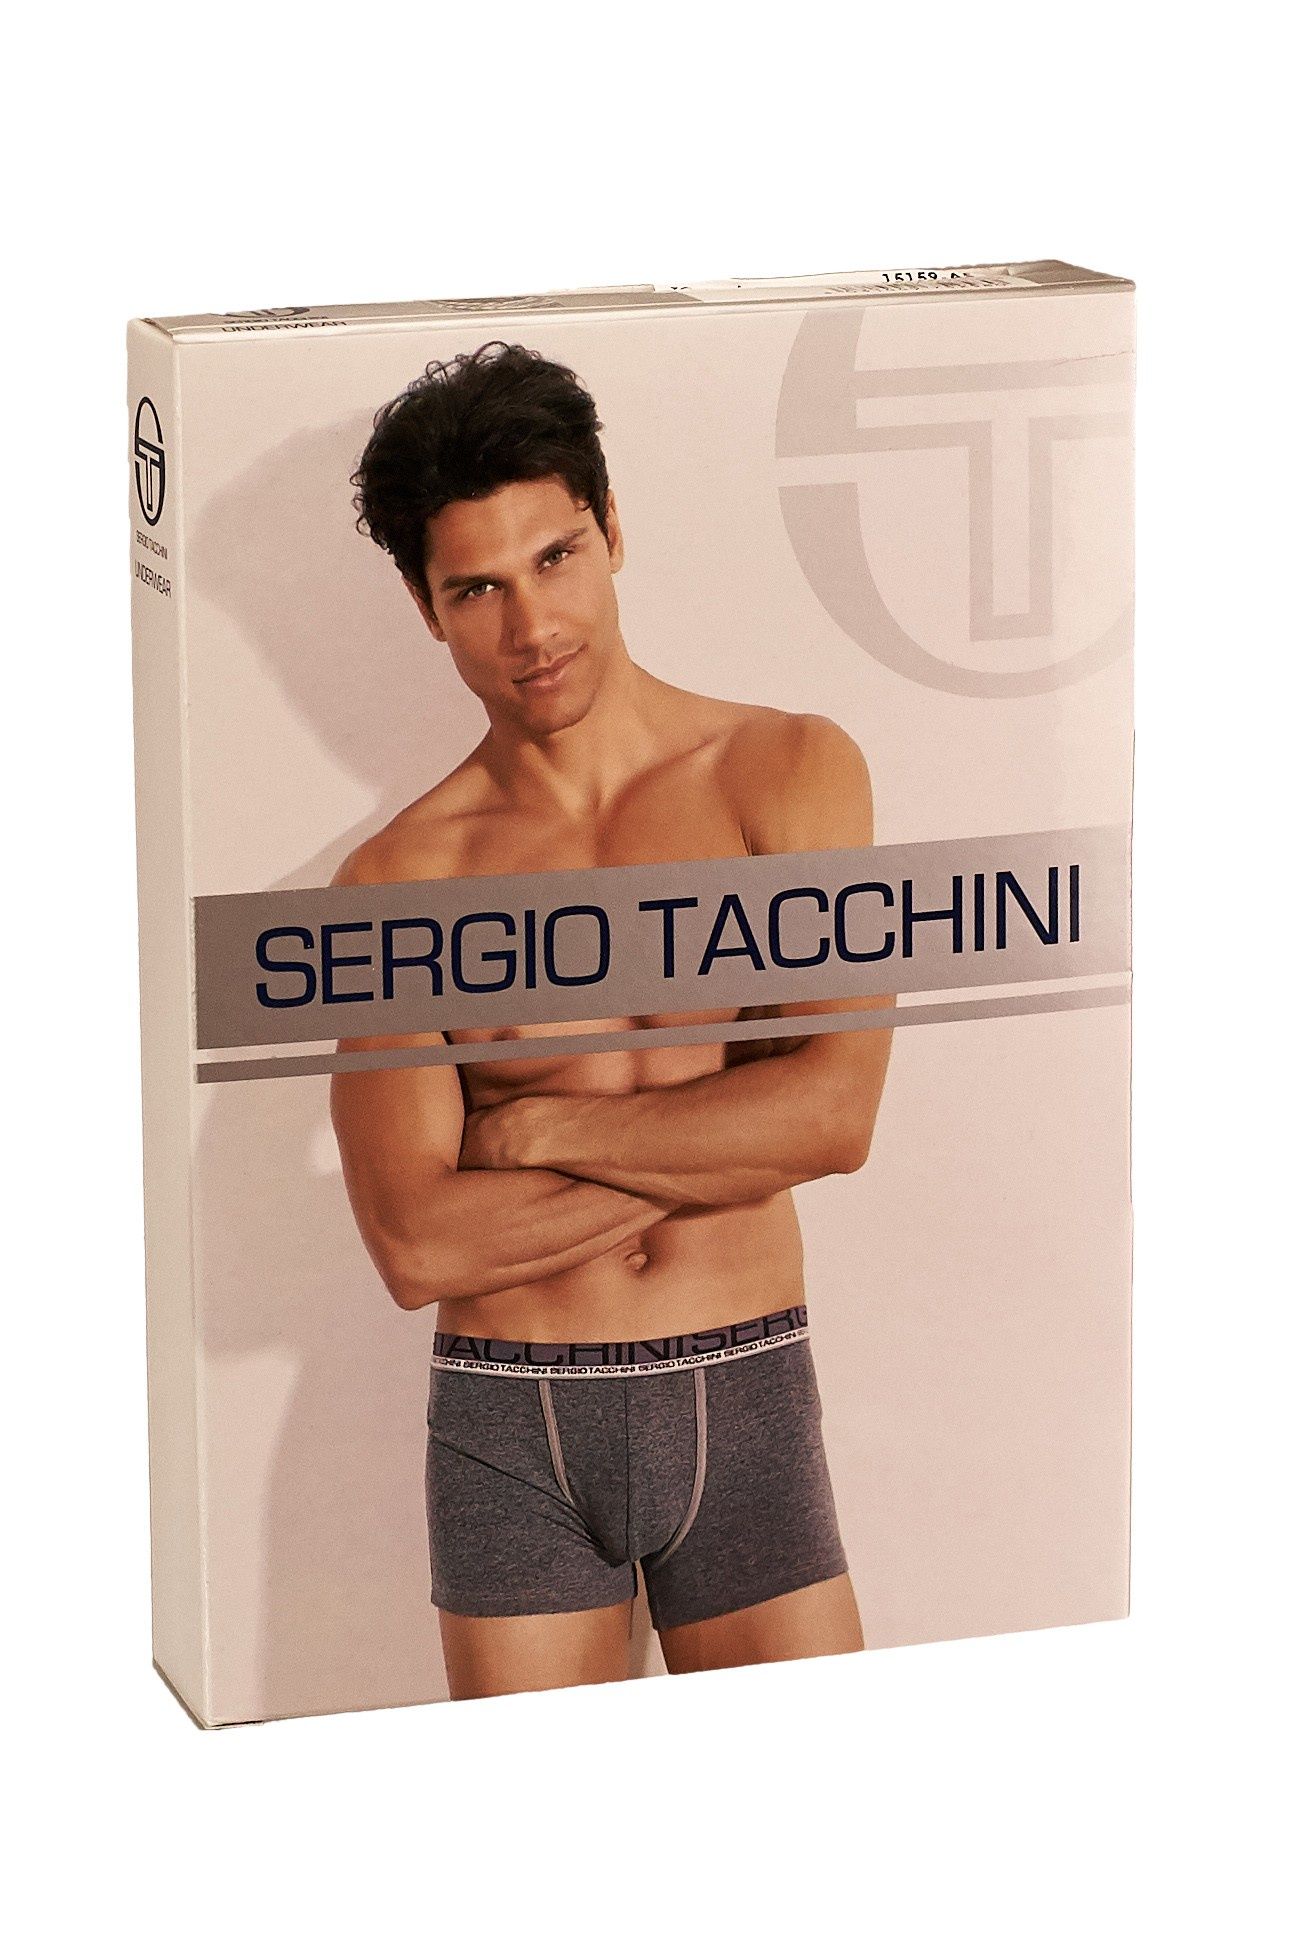  SERGIO TACCHINI 15159 AVION 50(5) , 50 